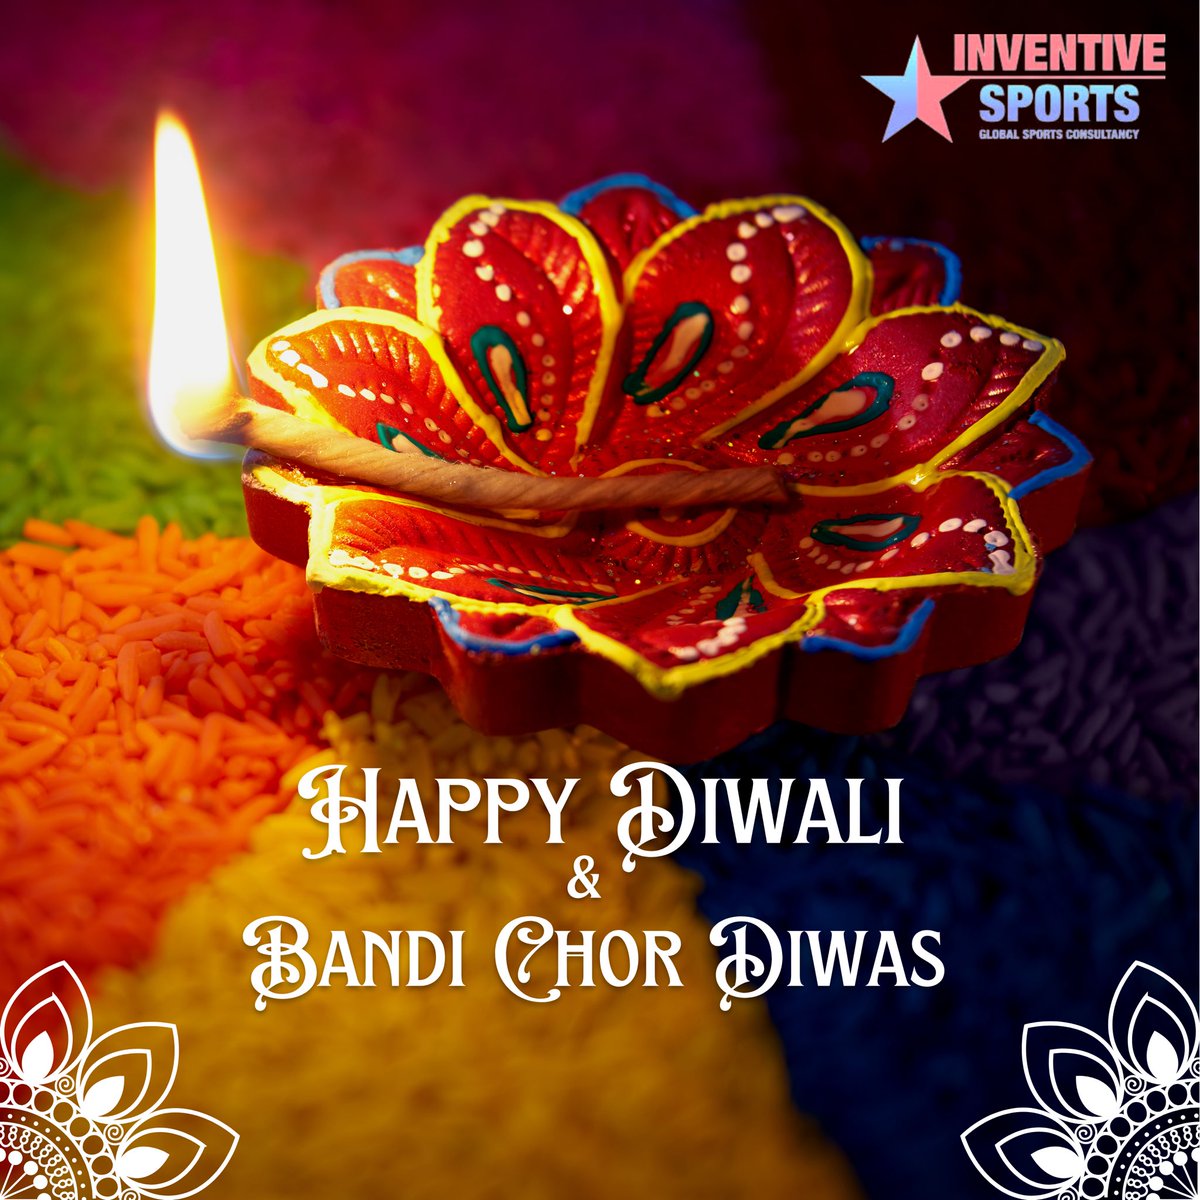 Happy Diwali & Bandi Chor Diwas to all celebrating today. Peace and Prosperity to all around the world 🙏🏼 #HappyDiwali  #BandiChorDiwas